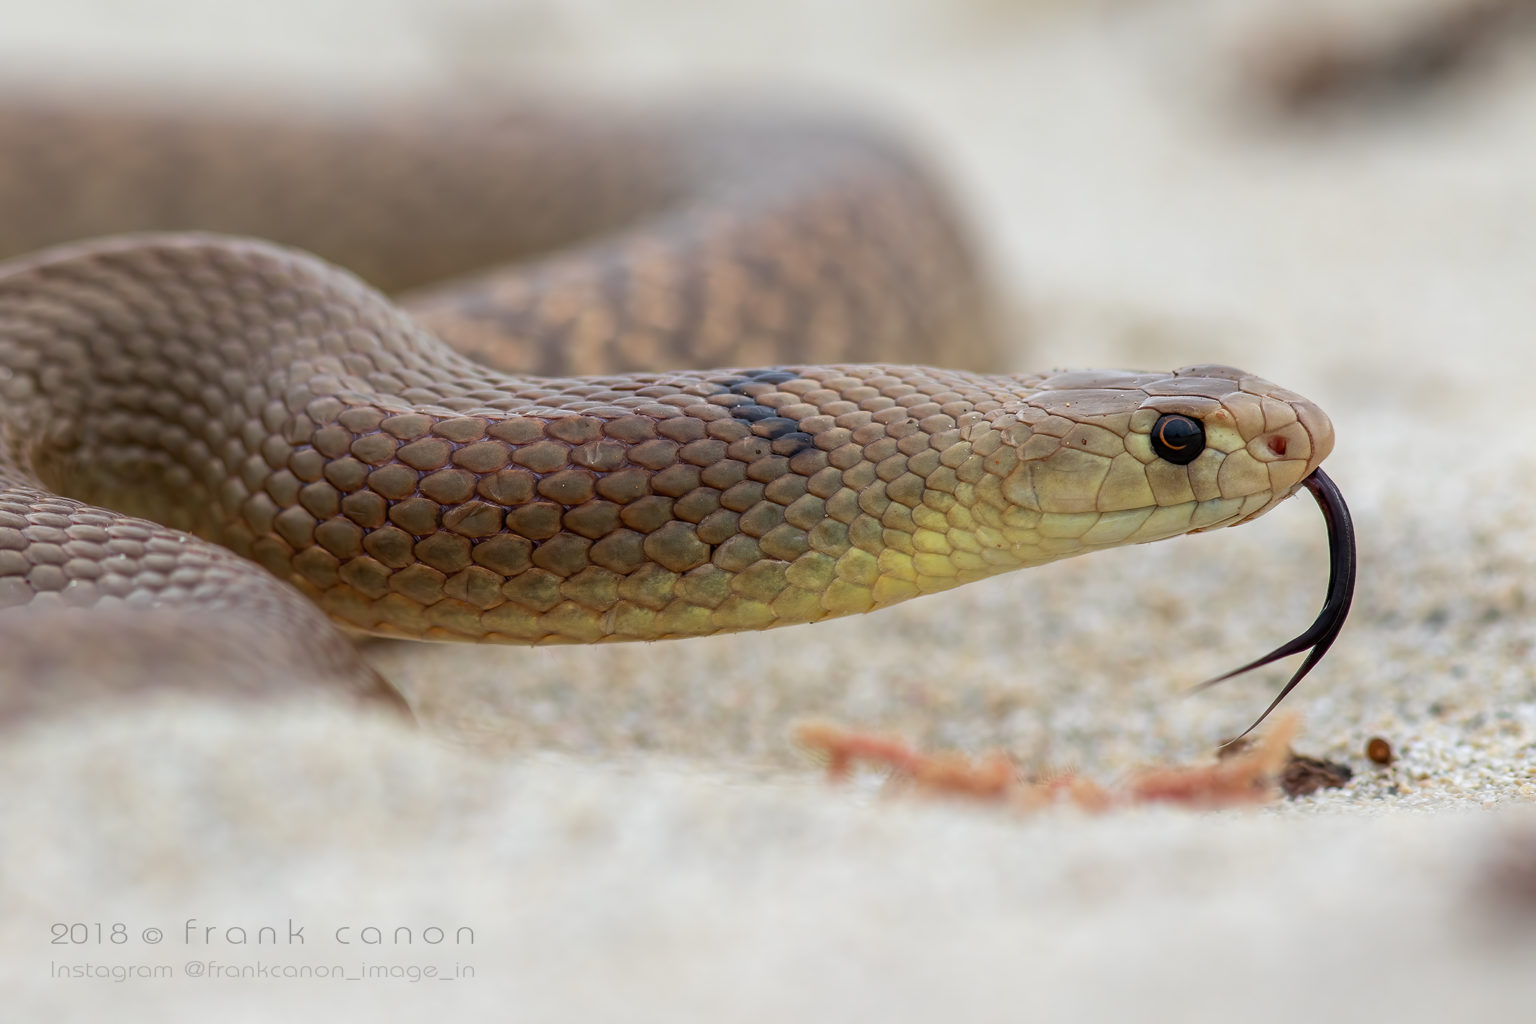 Pseudonaja mengdeni - "Mengden's Brown Snake"